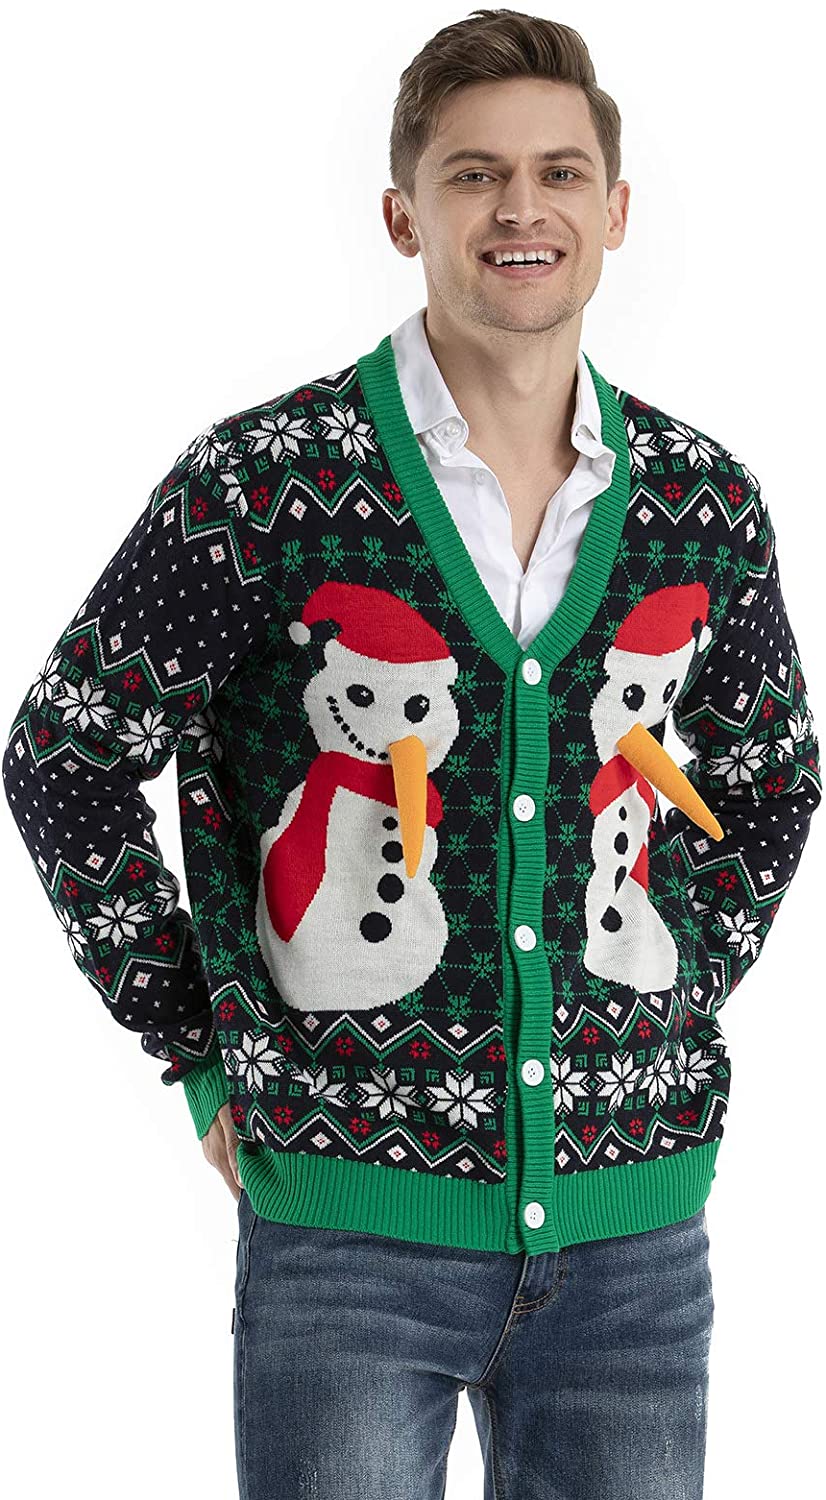 OFF THE RACK Unisex Christmas Sweater Mixte 